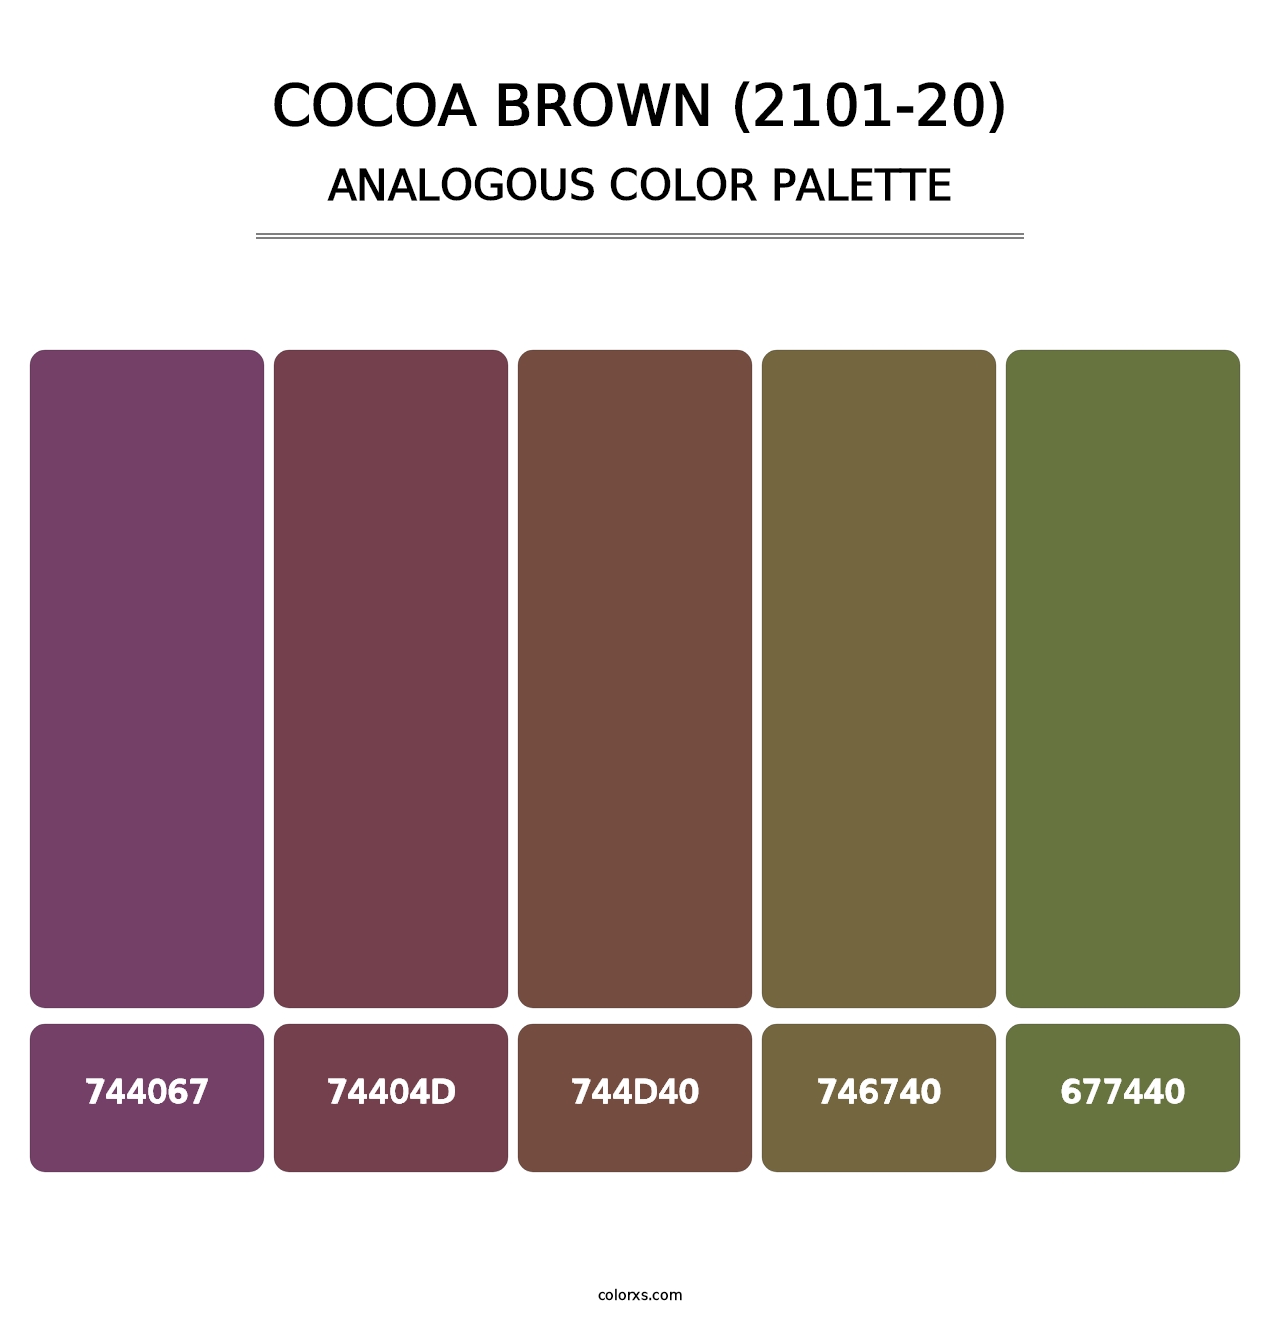 Cocoa Brown (2101-20) - Analogous Color Palette